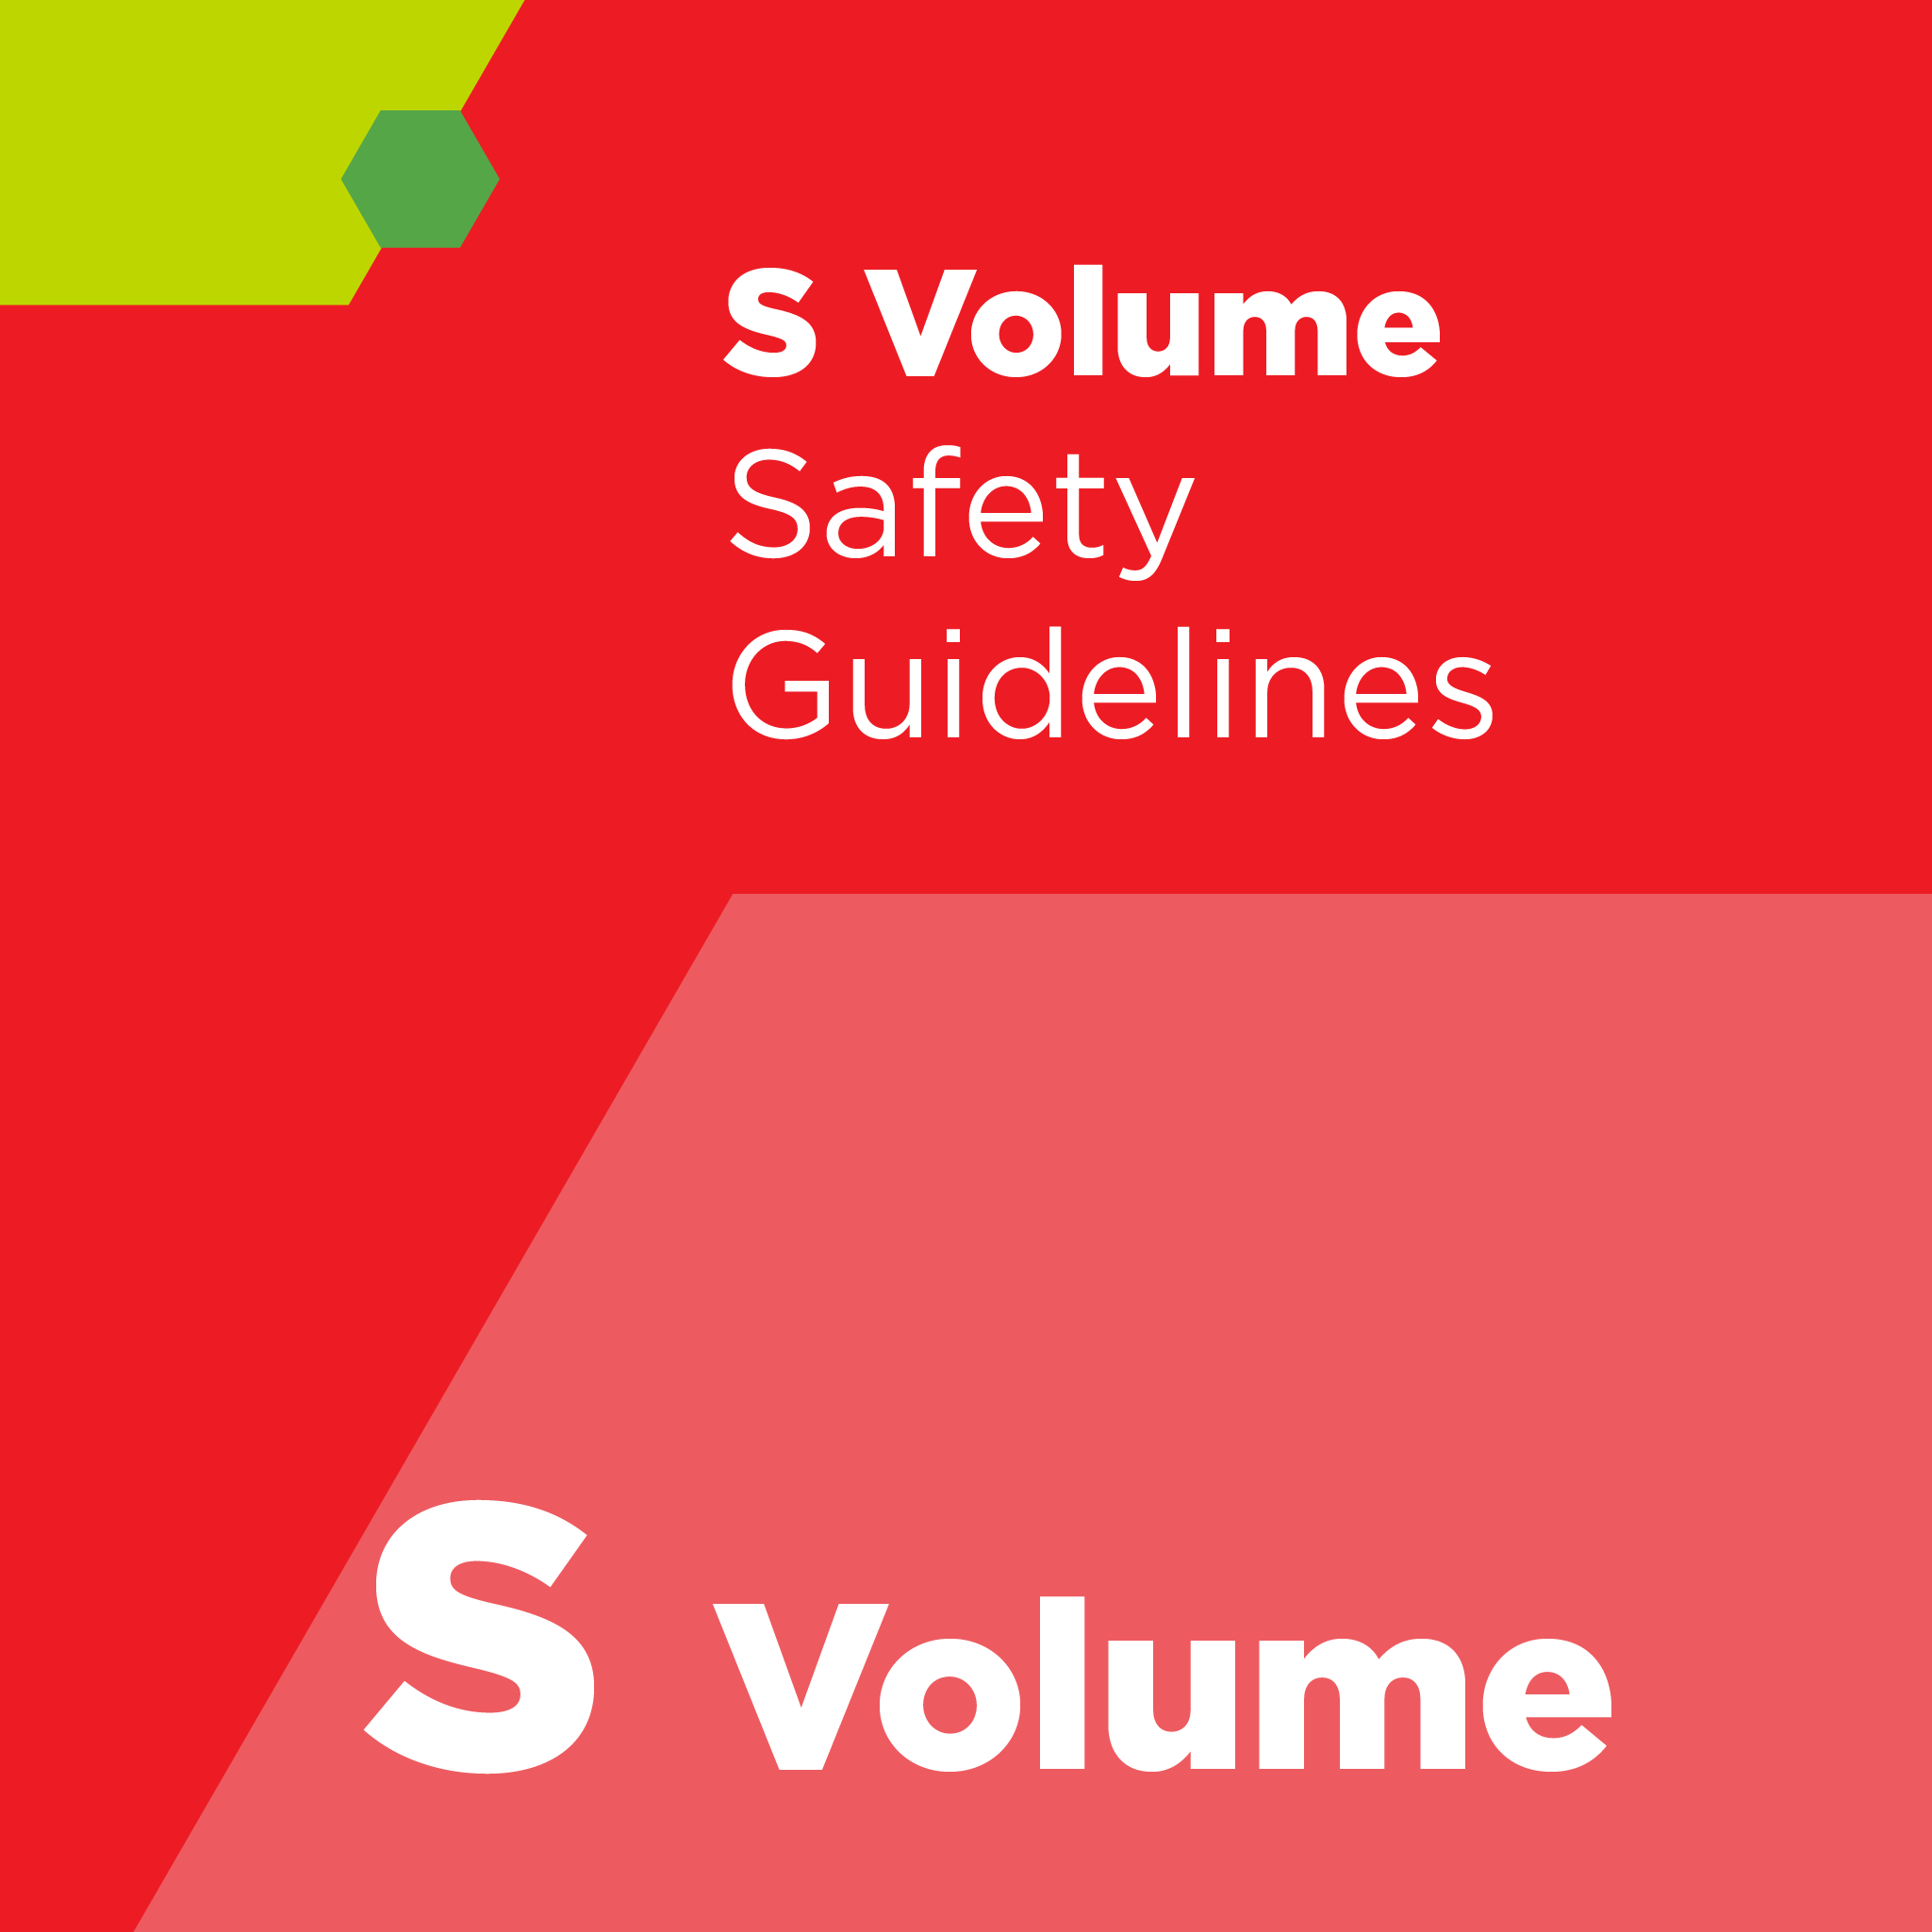 S01400 - SEMI S14 - 半導体製造装置に対する火災リスクアセスメントと軽減のための安全ガイドライン